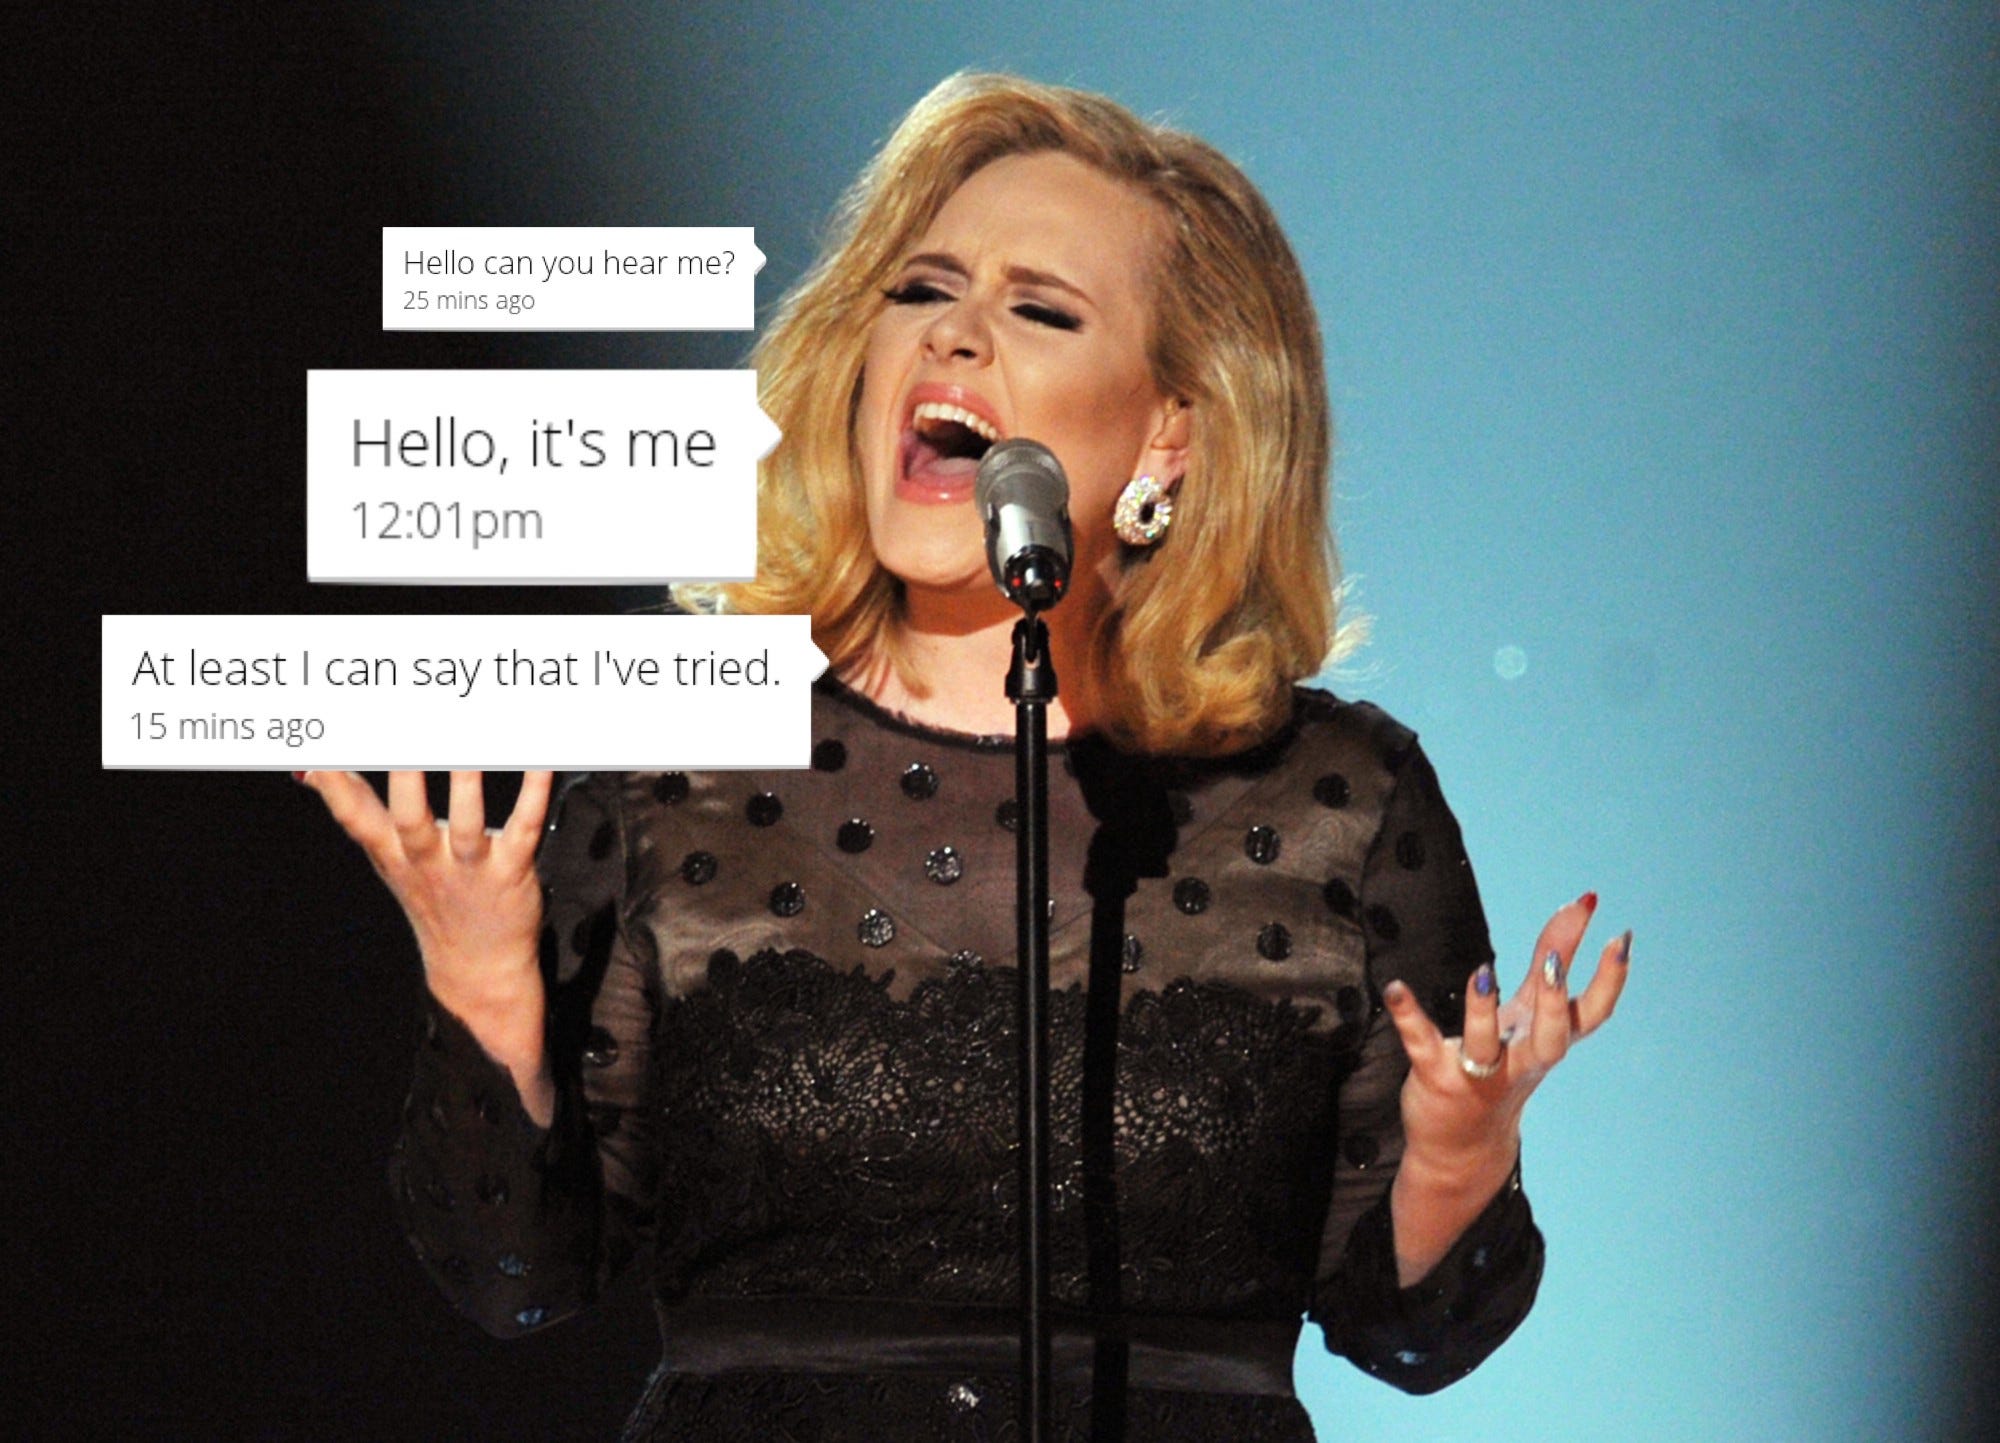 I Trolled My Tinder Matches With Lyrics From Adele’s “Hello”